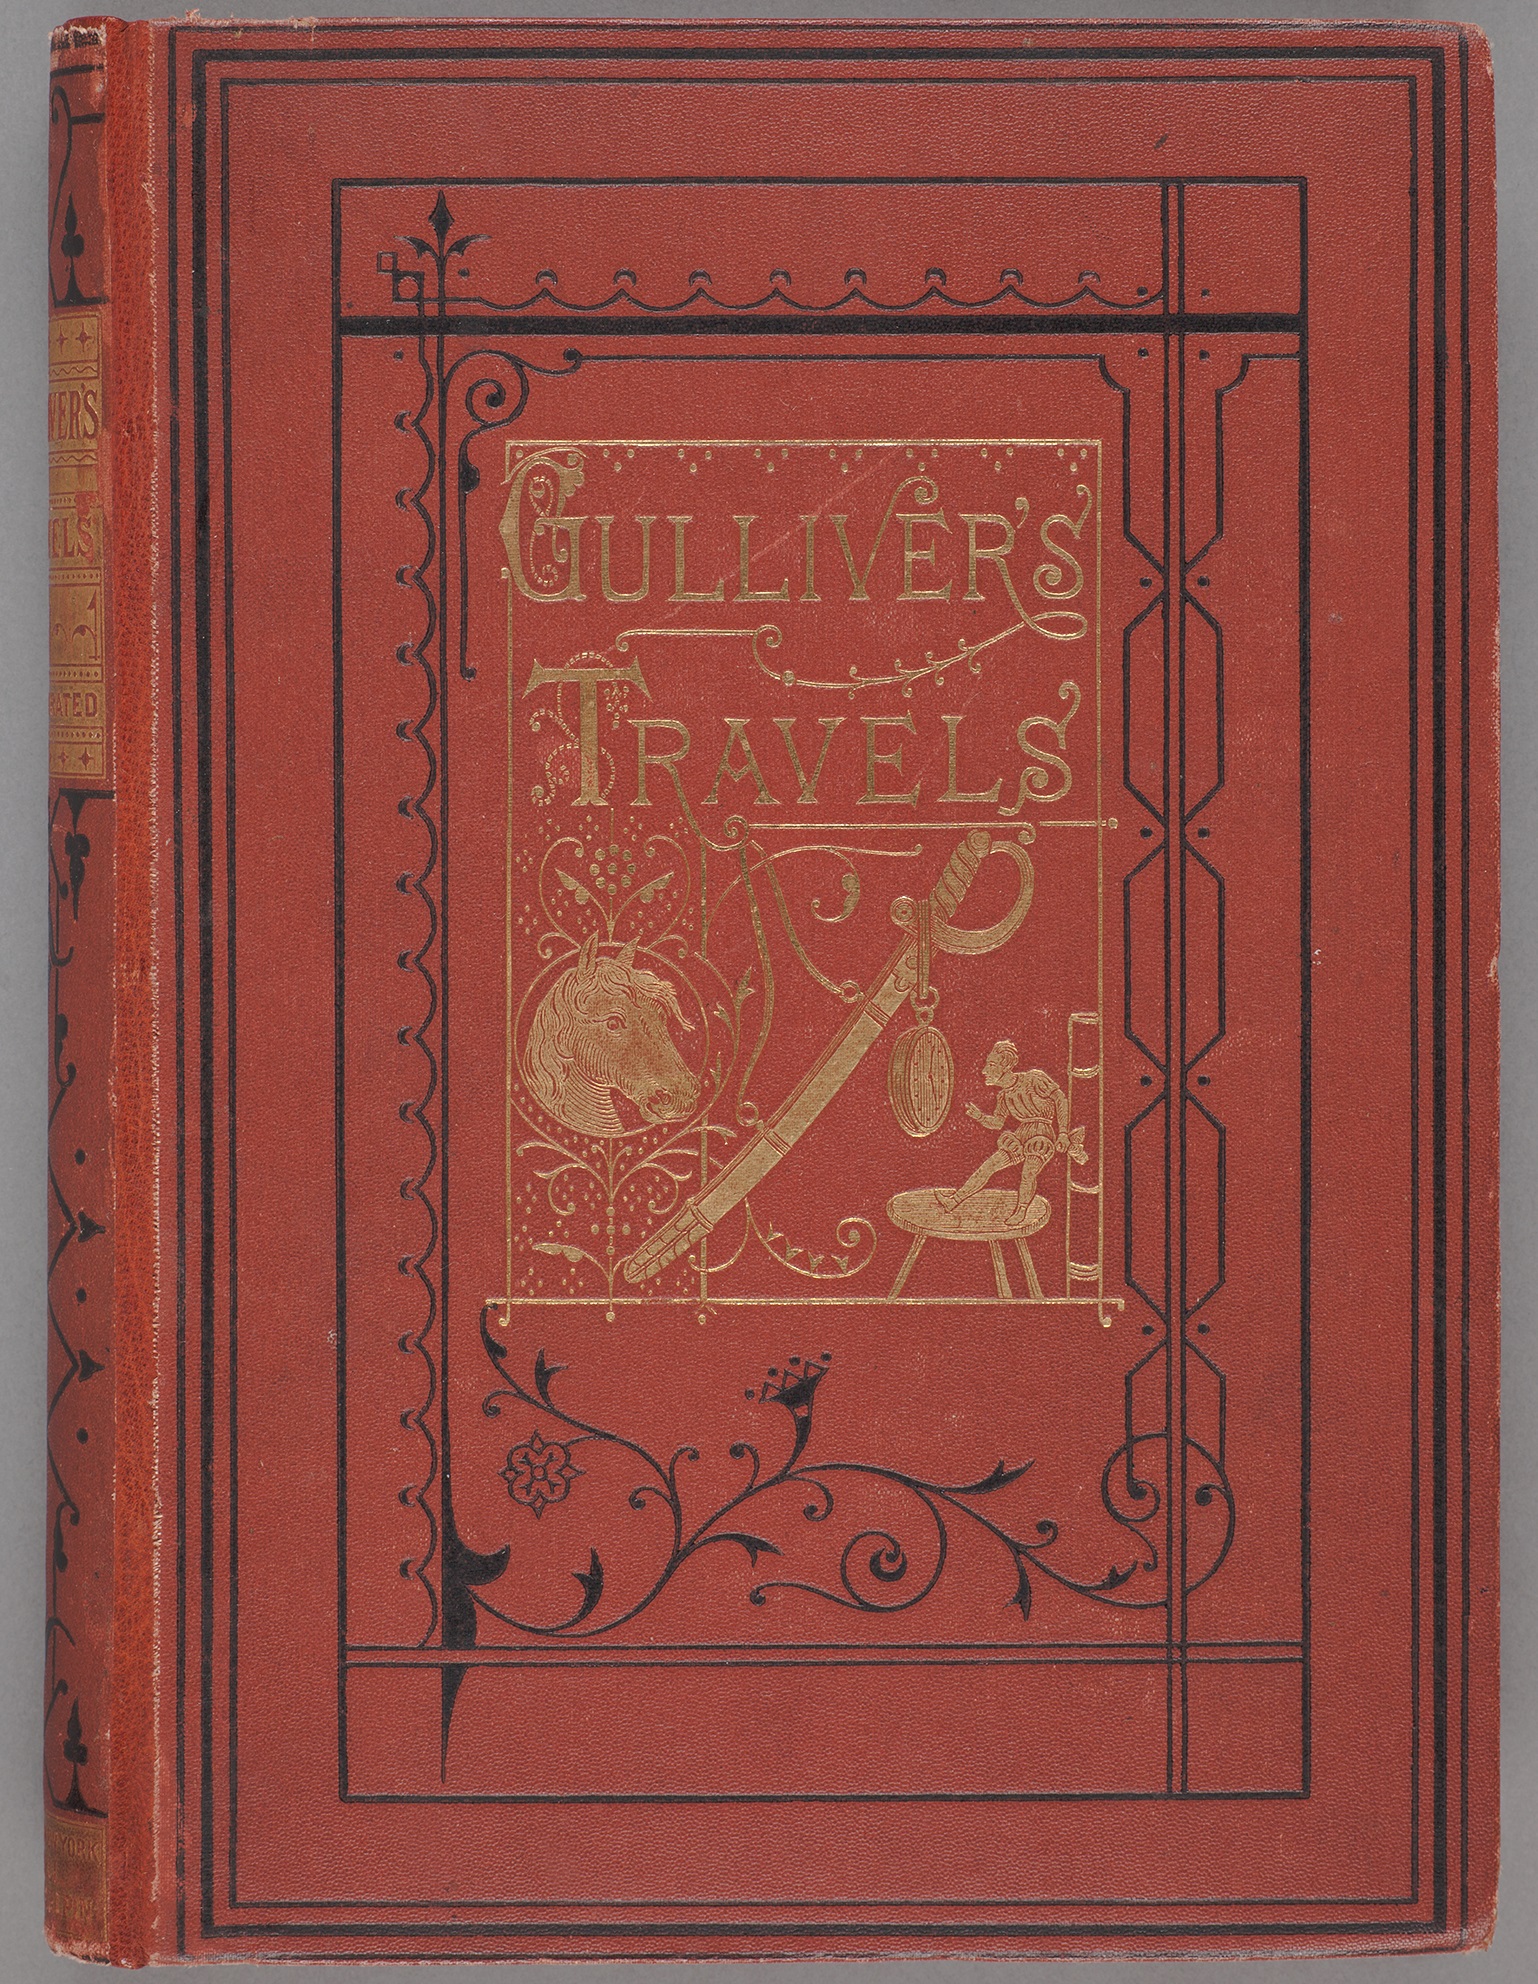 Gullivers resor 1870. Foto: KB